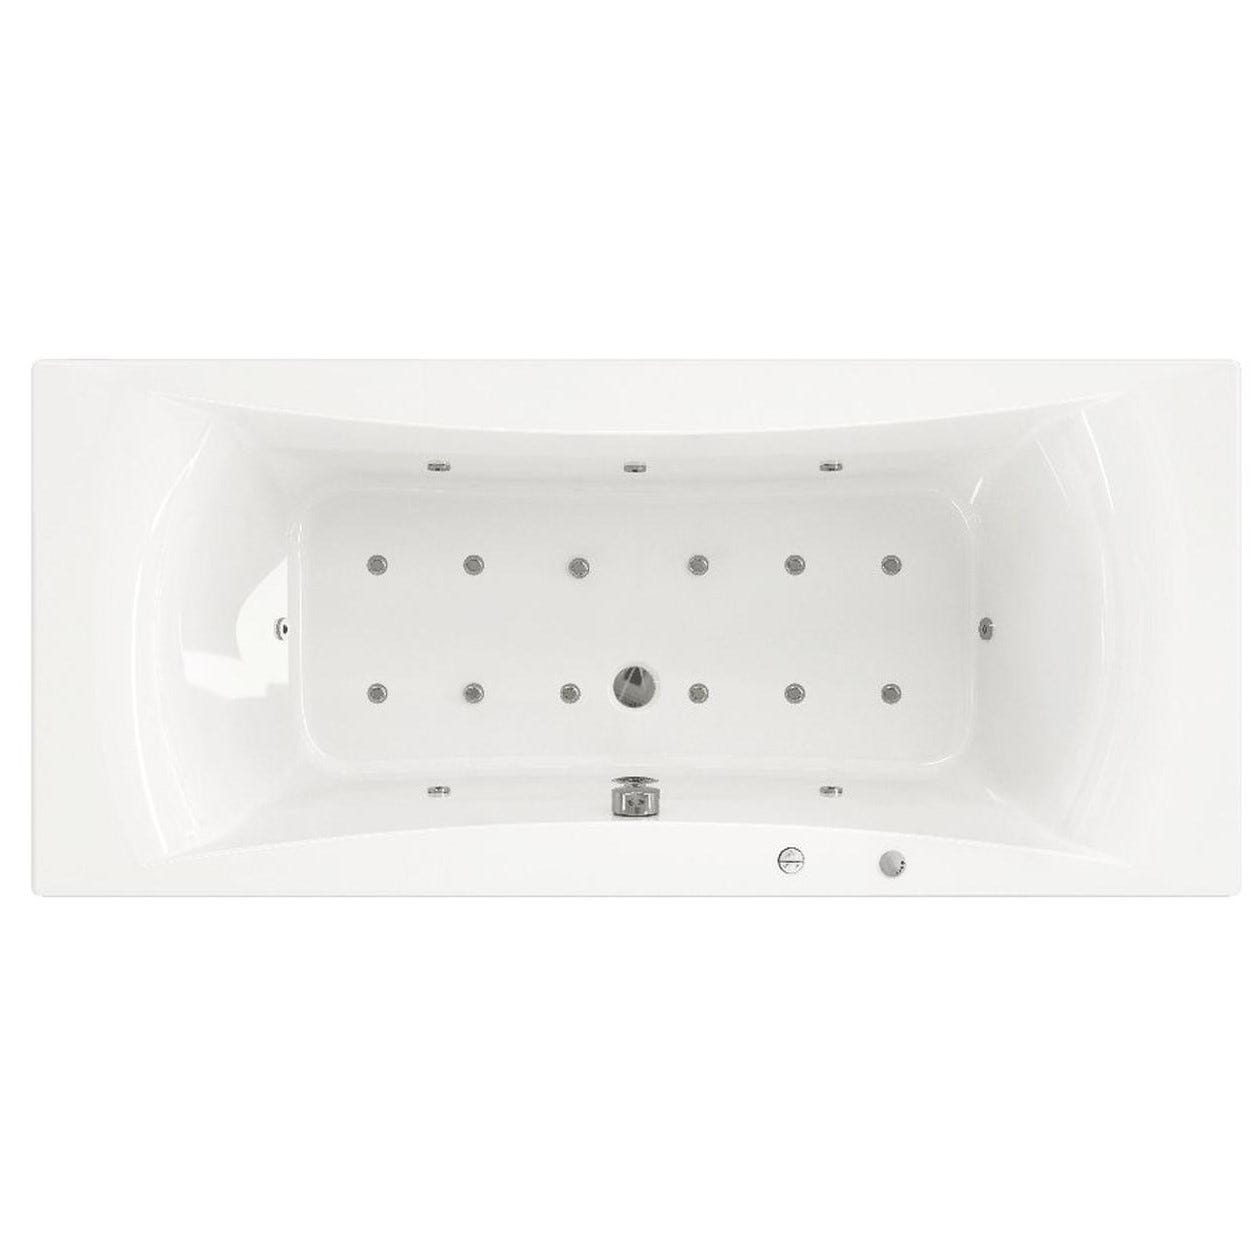 Baignoire balnéo CONCERTO 190x90 sur châssis métal, système balnéo SILENCE & AIR tête bain à droite 3